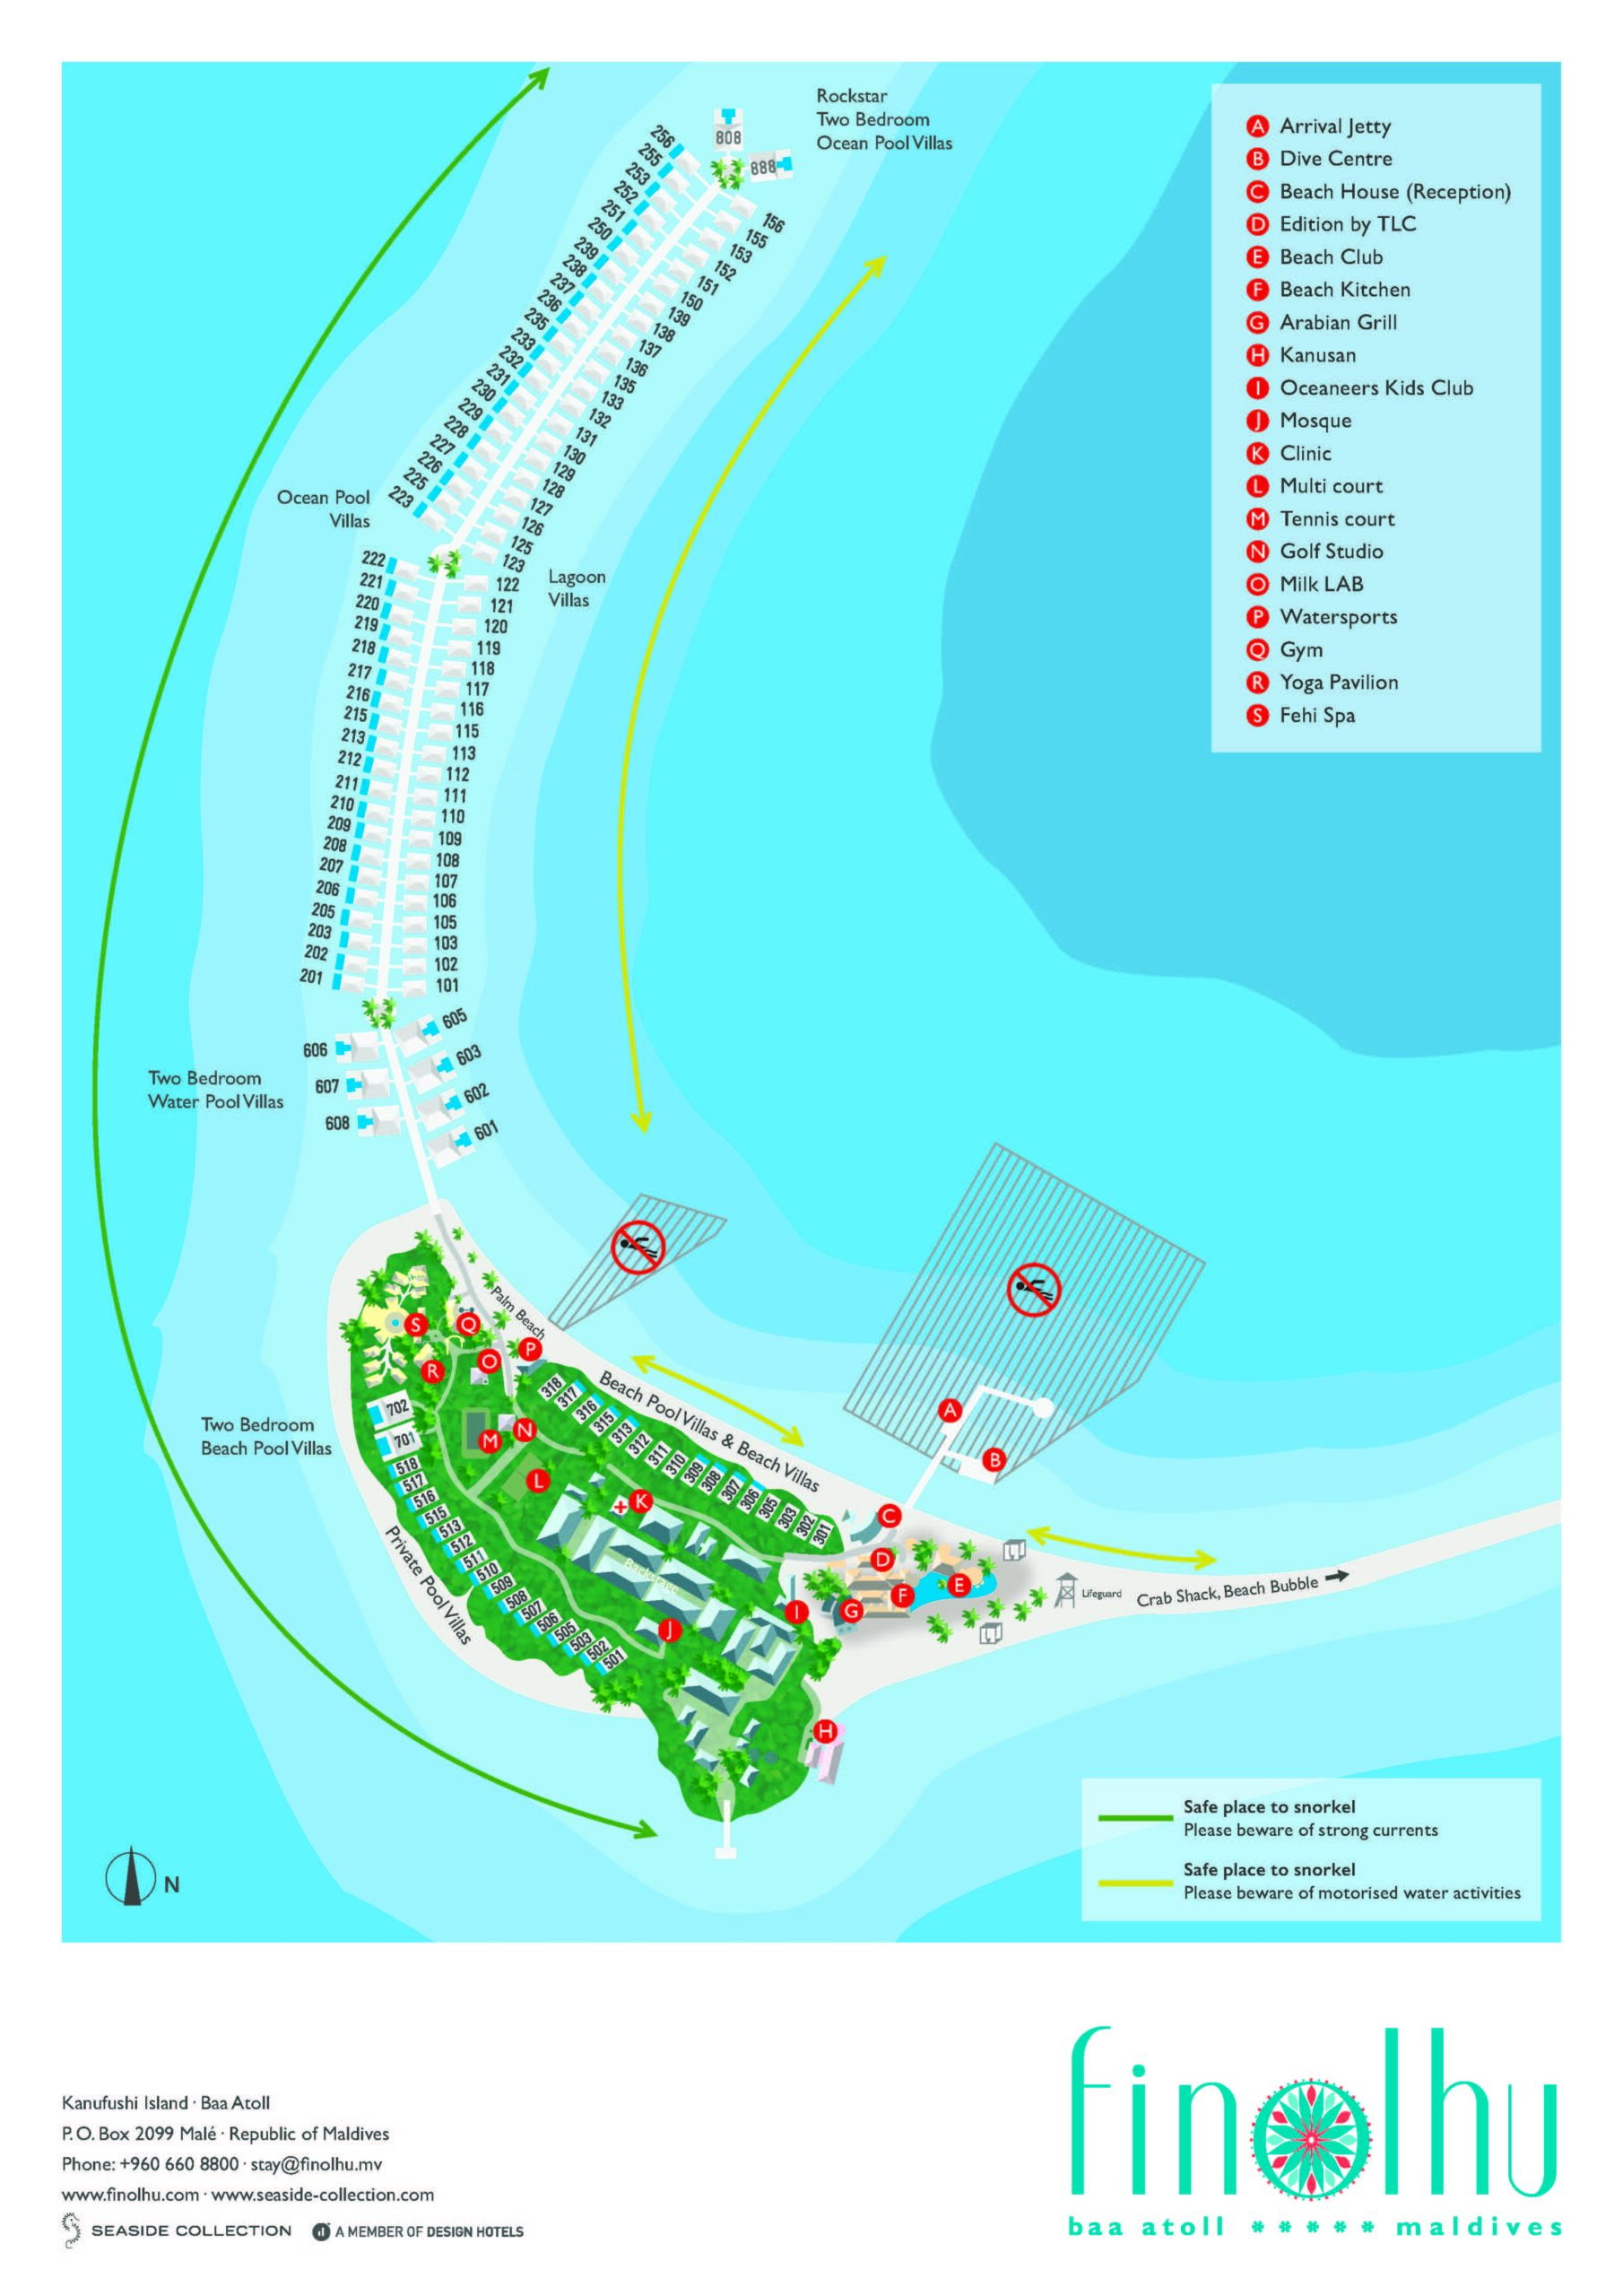 Seaside Finolhu Baa Atoll Maldives Resort Map